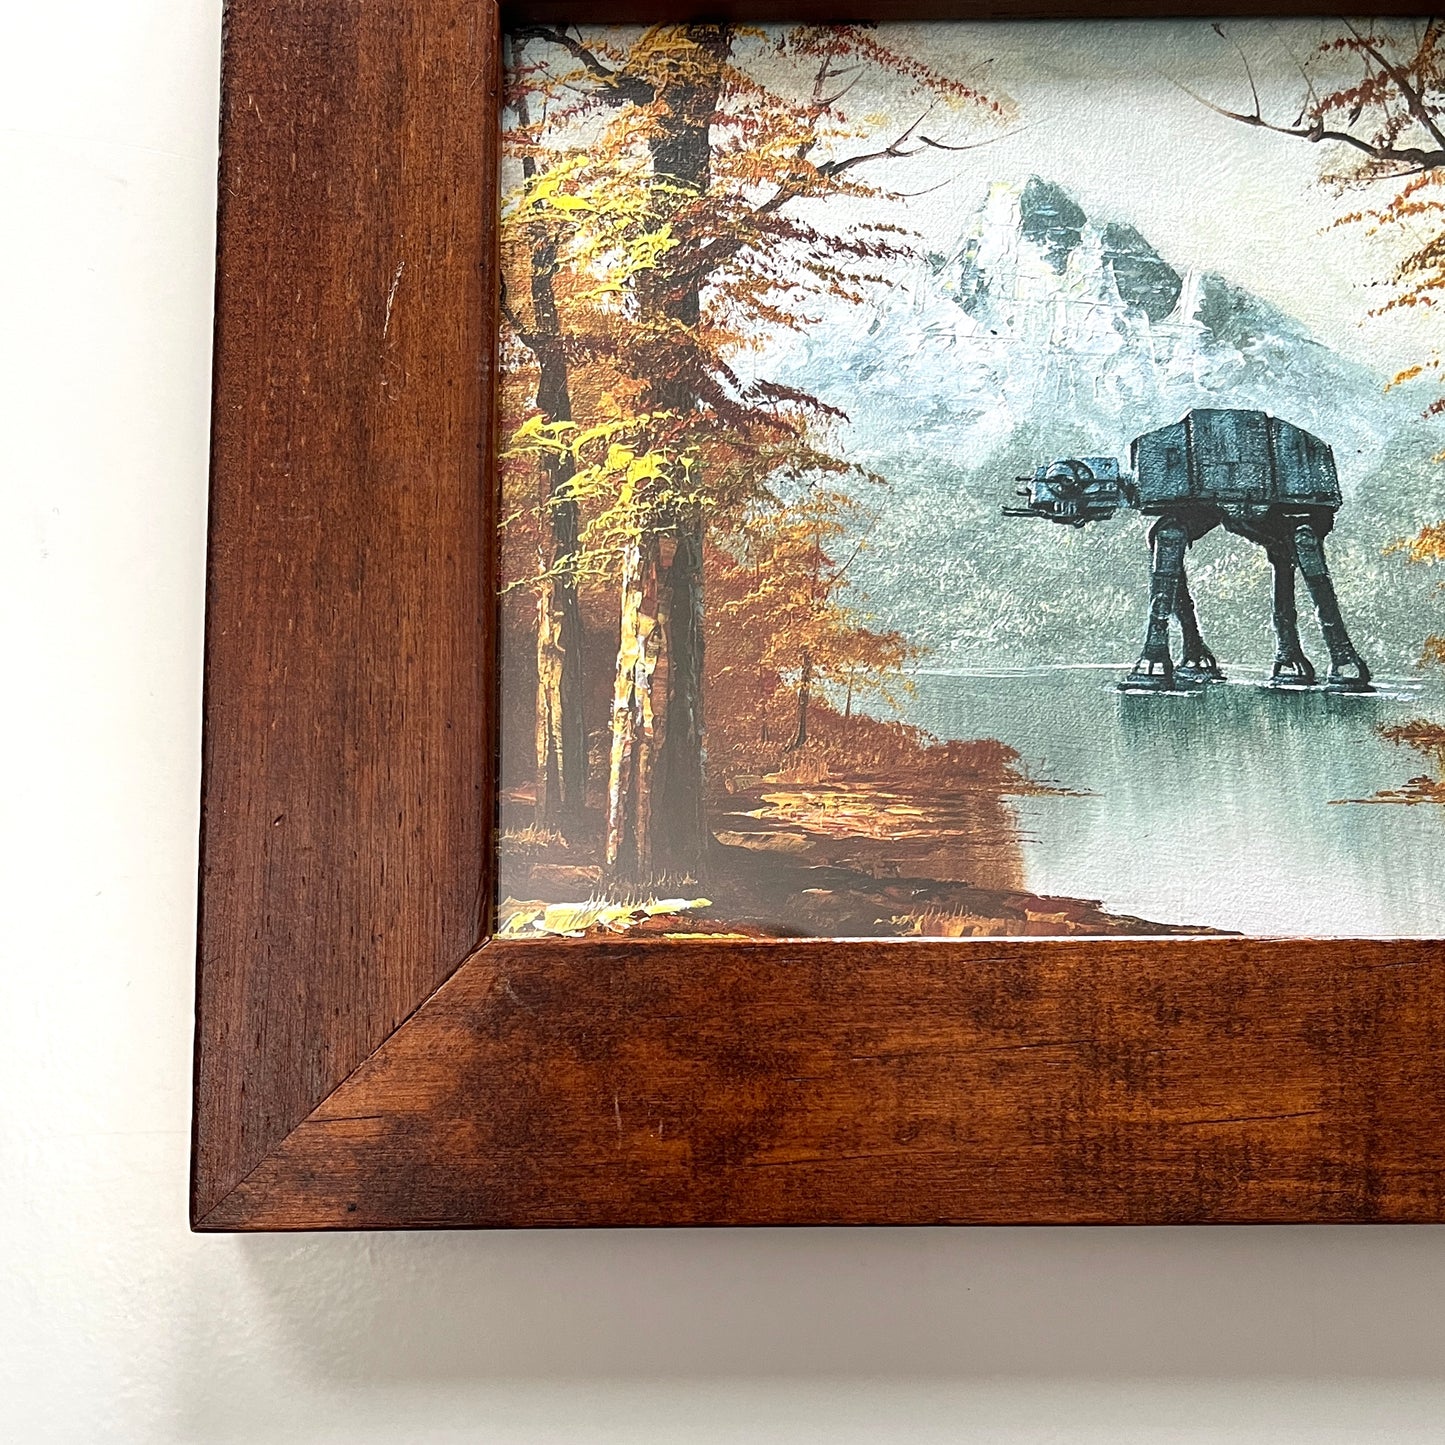 Autumn Walker - PRINT in Reclaimed Frame, Wood